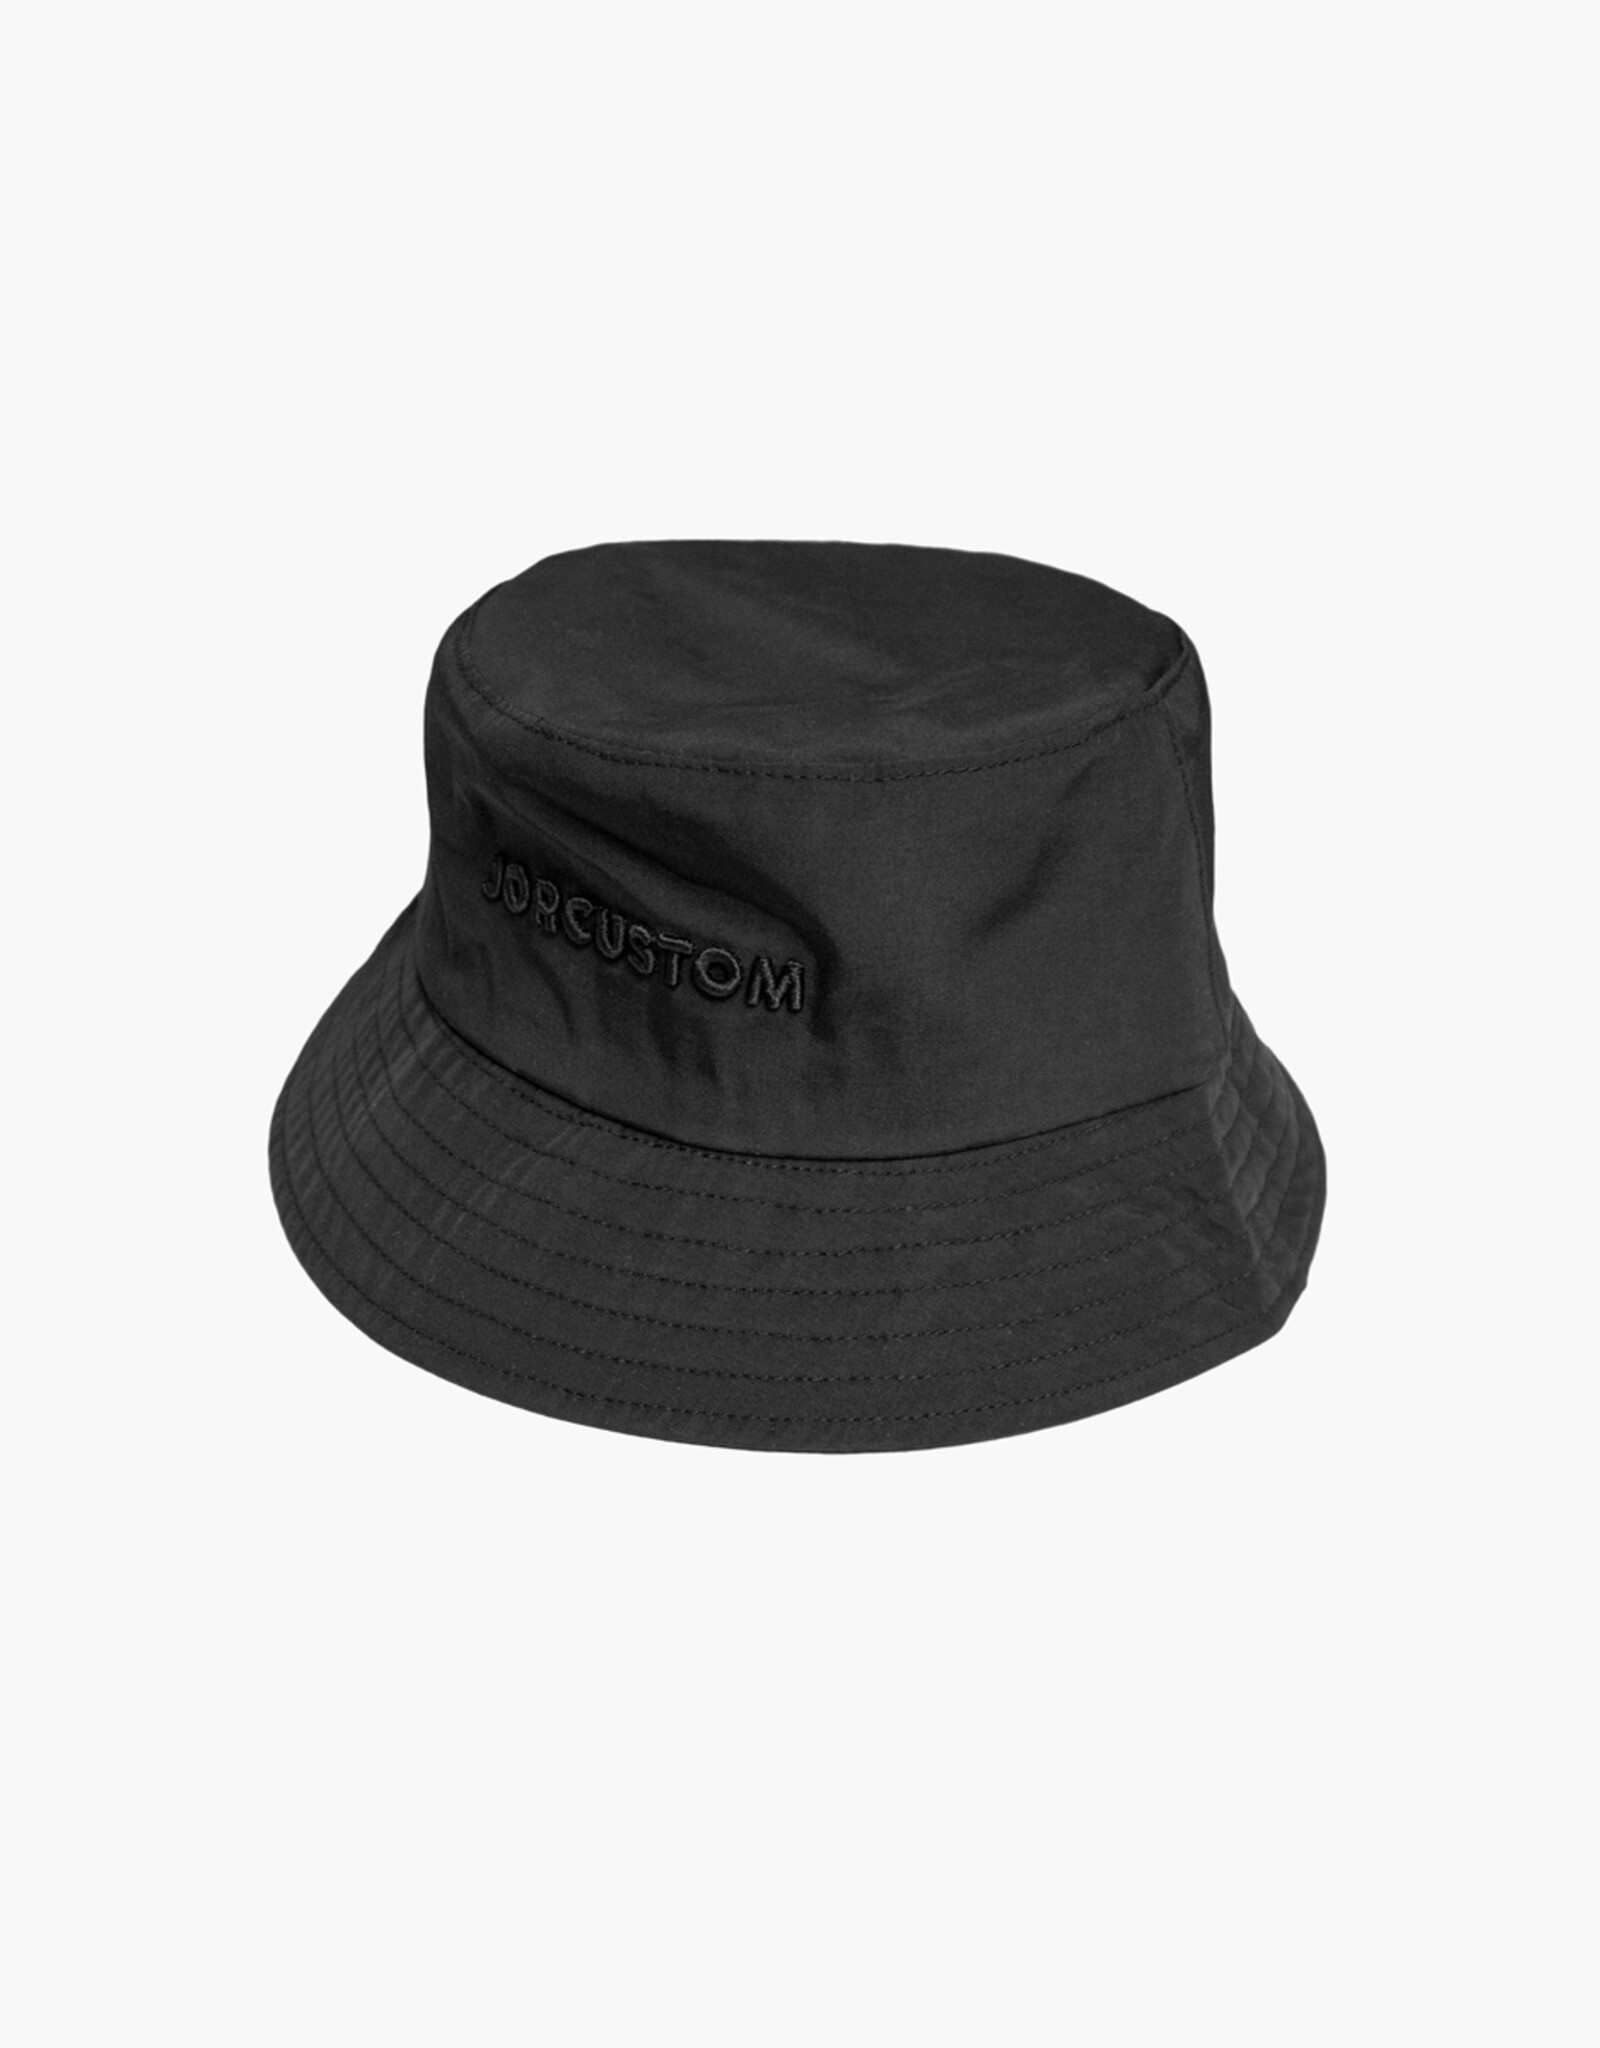 JorCustom Bucket Hat Black